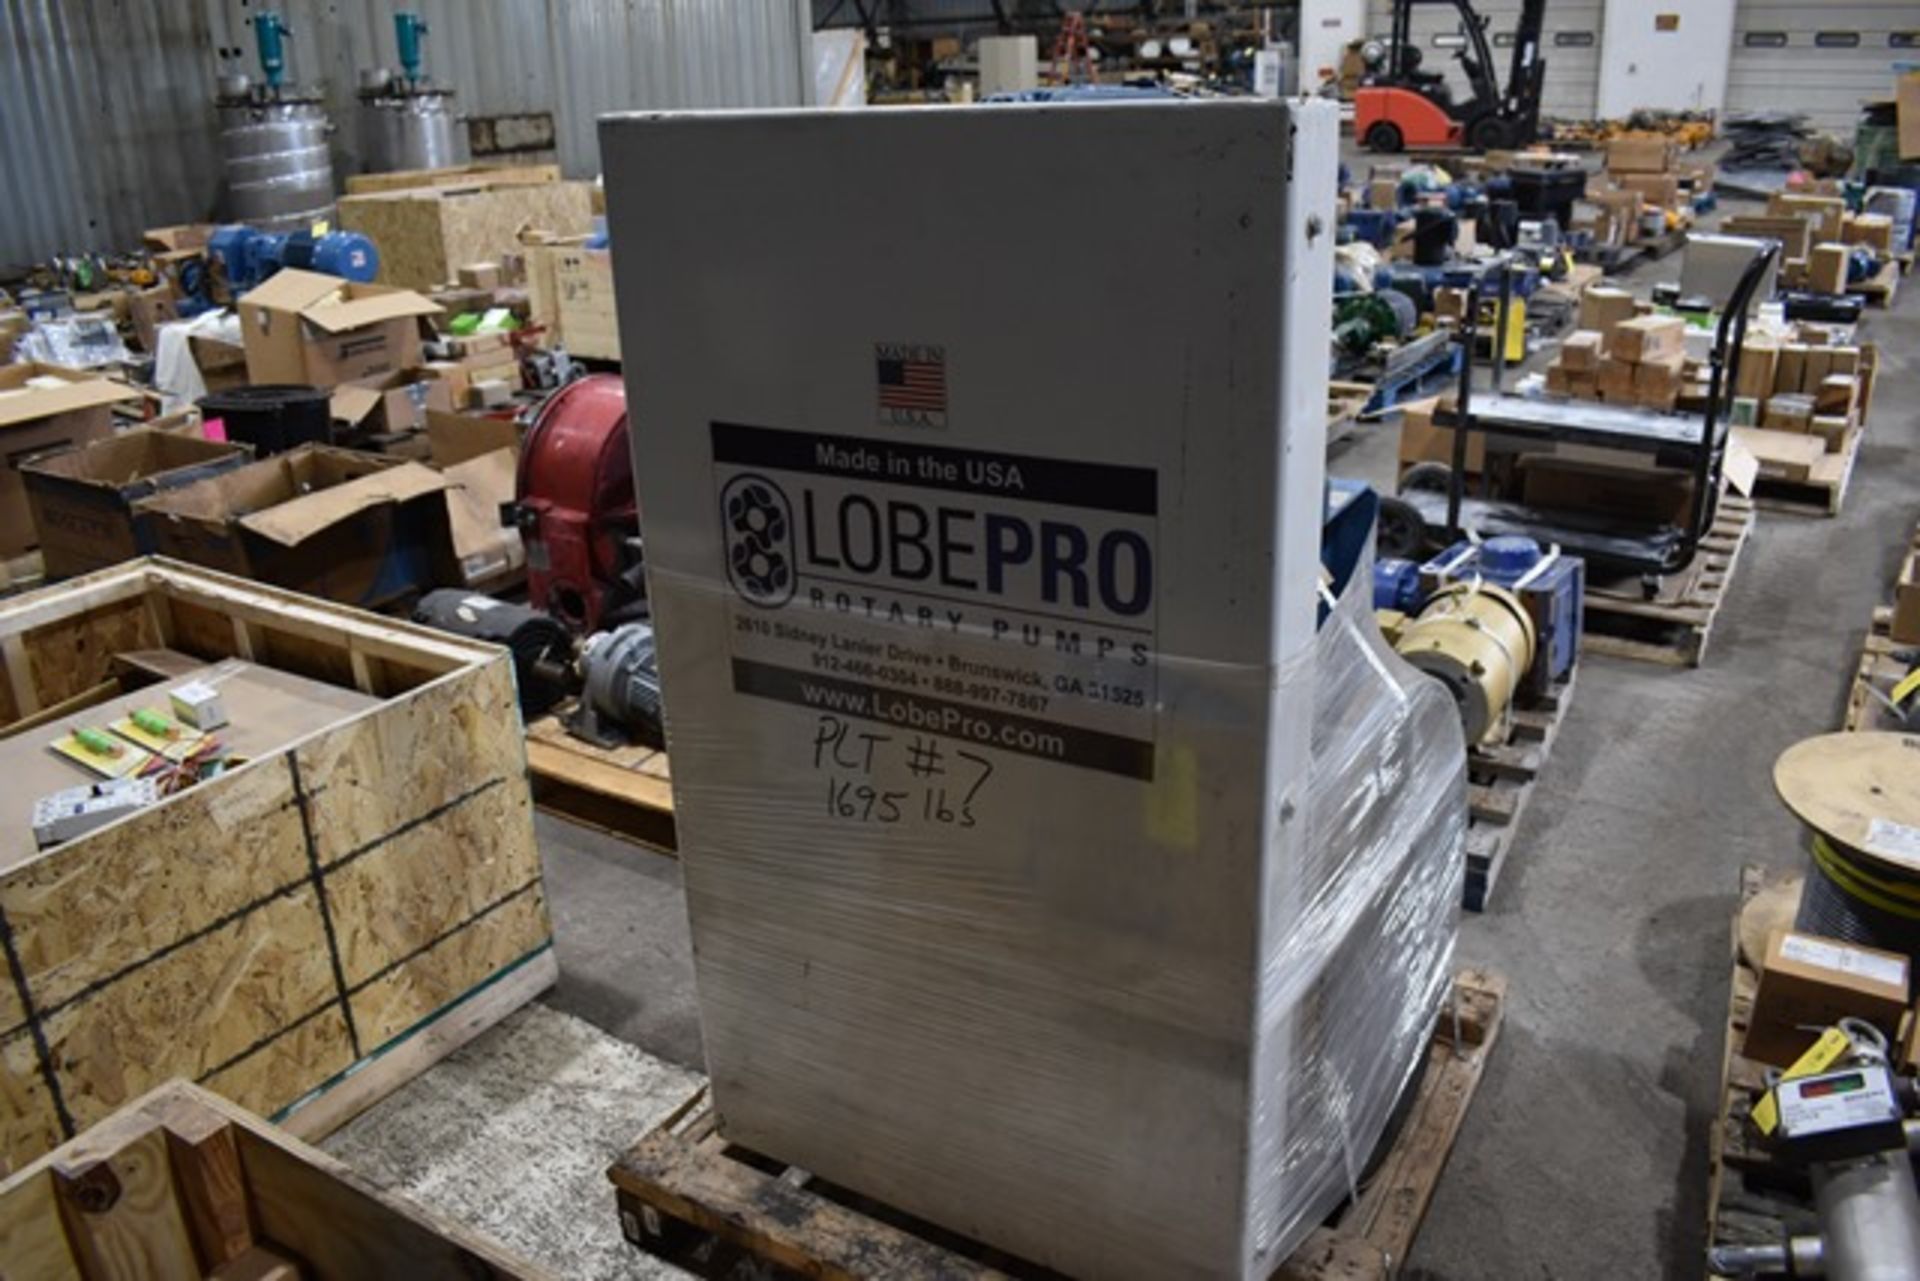 Lobepro Rotary Pump, 20 HP Motor, $25 Rigging/Loading Fee